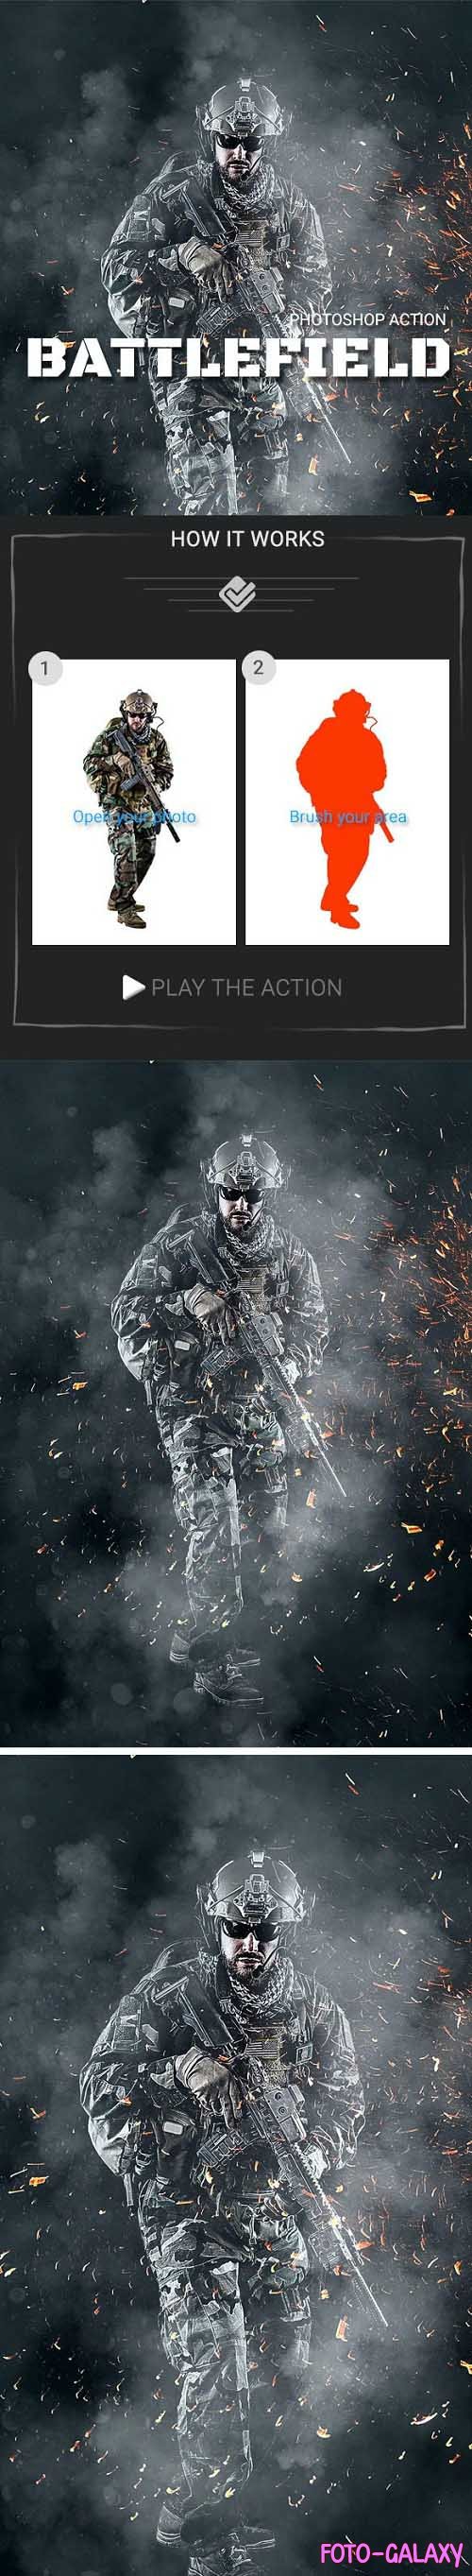 Battlefield Photoshop Action - 20908798